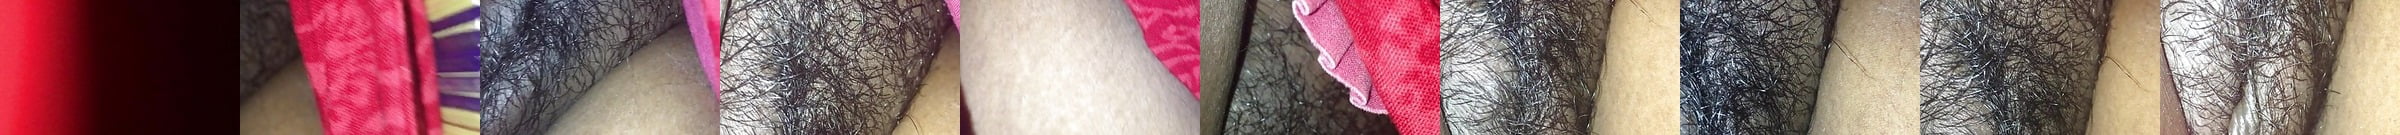 My Sister Porn Videos Free Sex Tube Xhamster